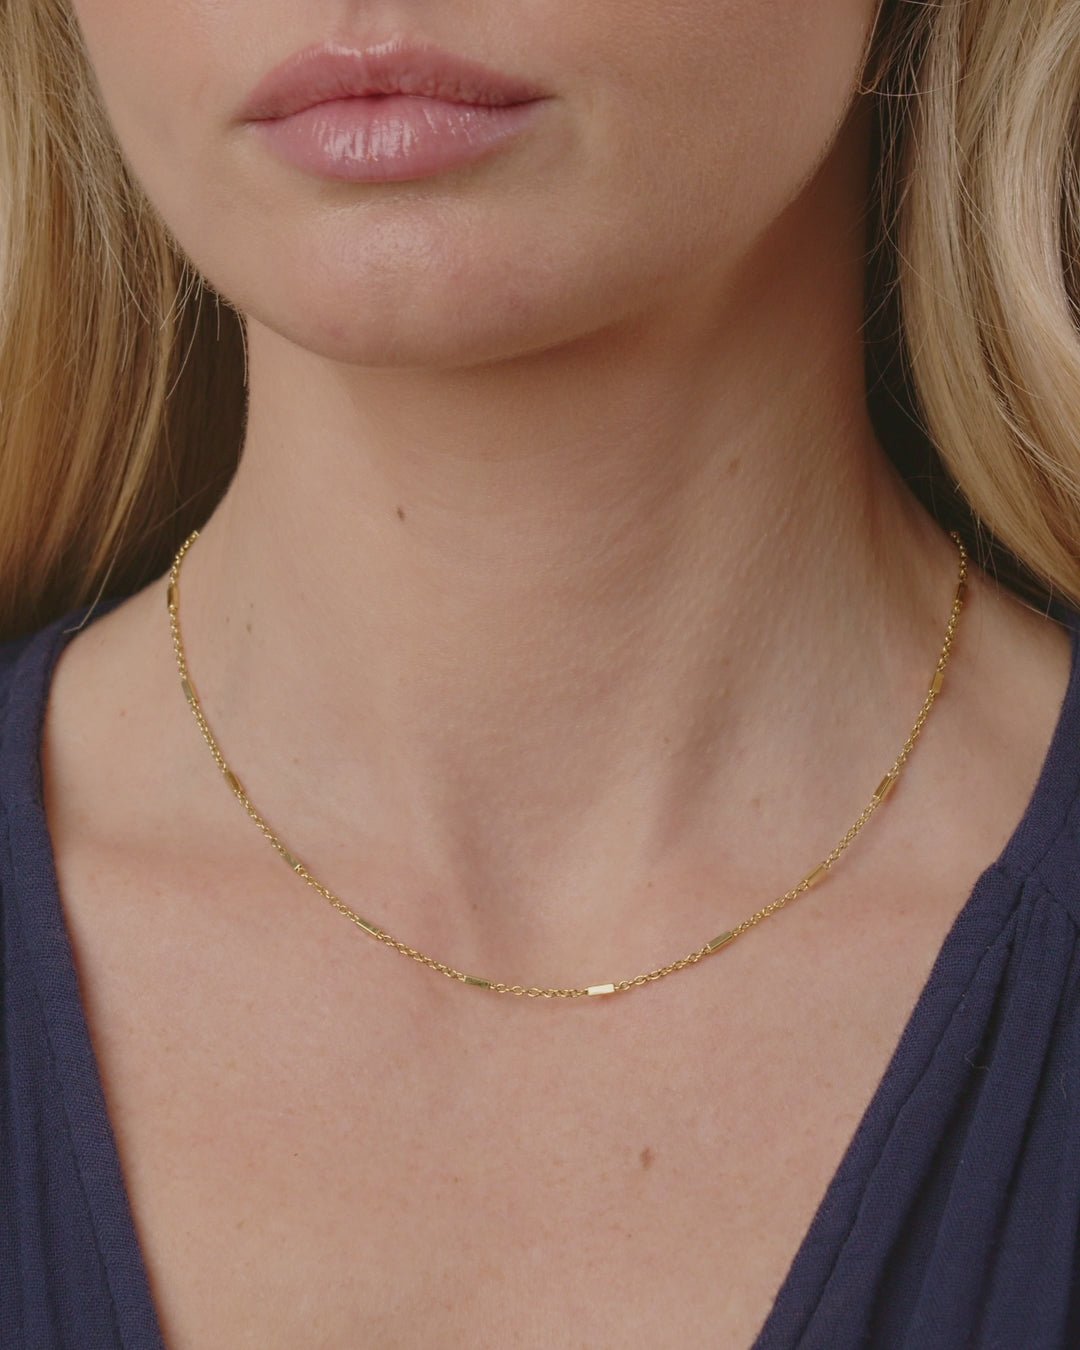 Gold | gorjana jewelry | Tatum Necklace | Textured chain necklace